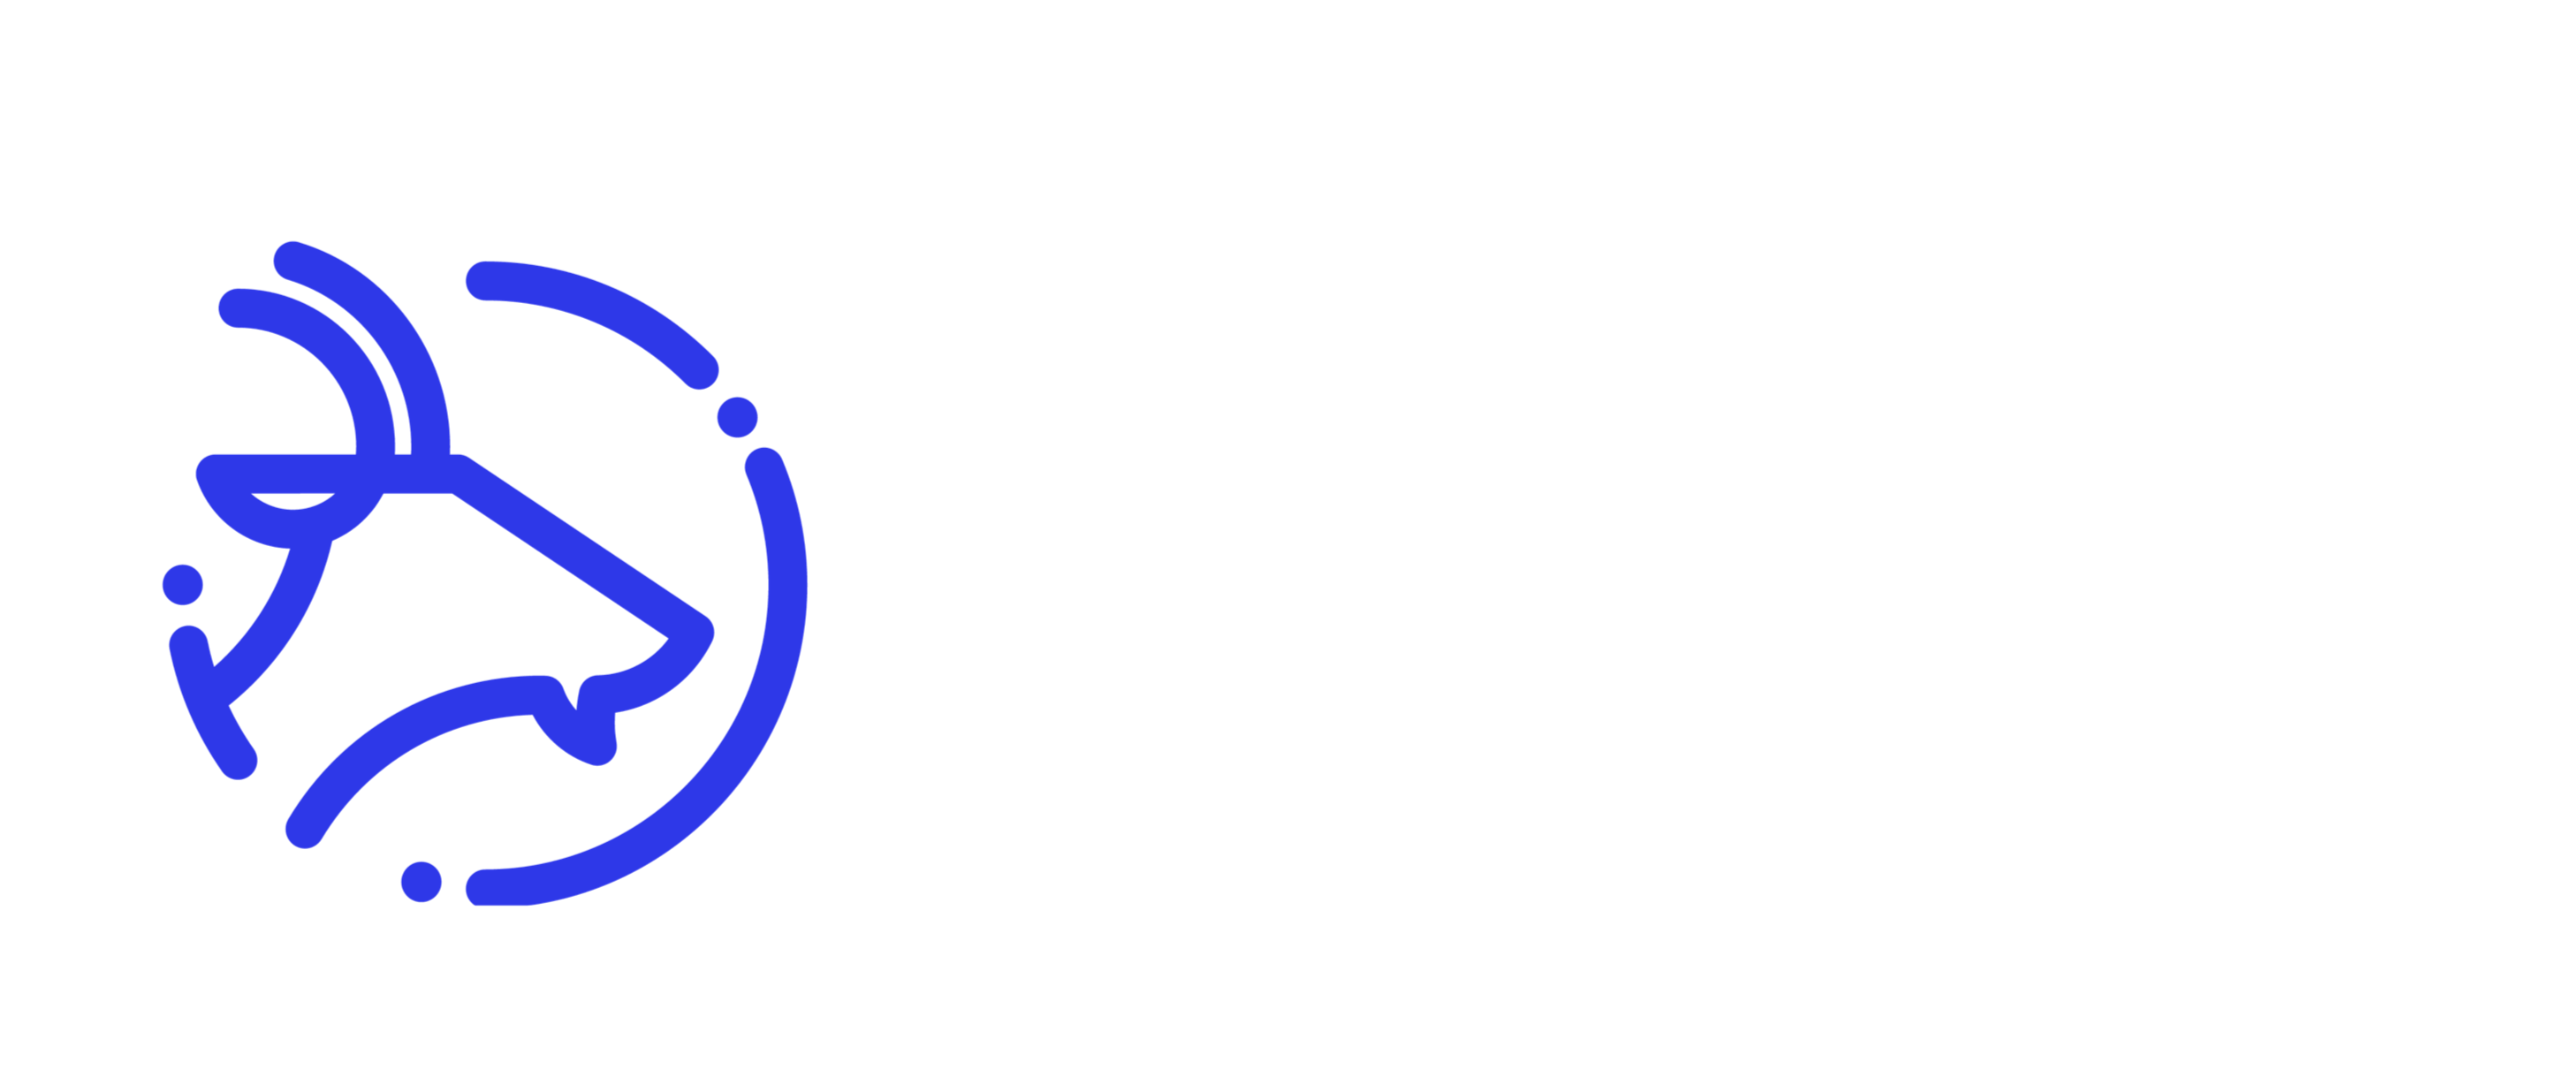 Logotipo Goat 2.0 Digital Investments sobre fondo oscuro